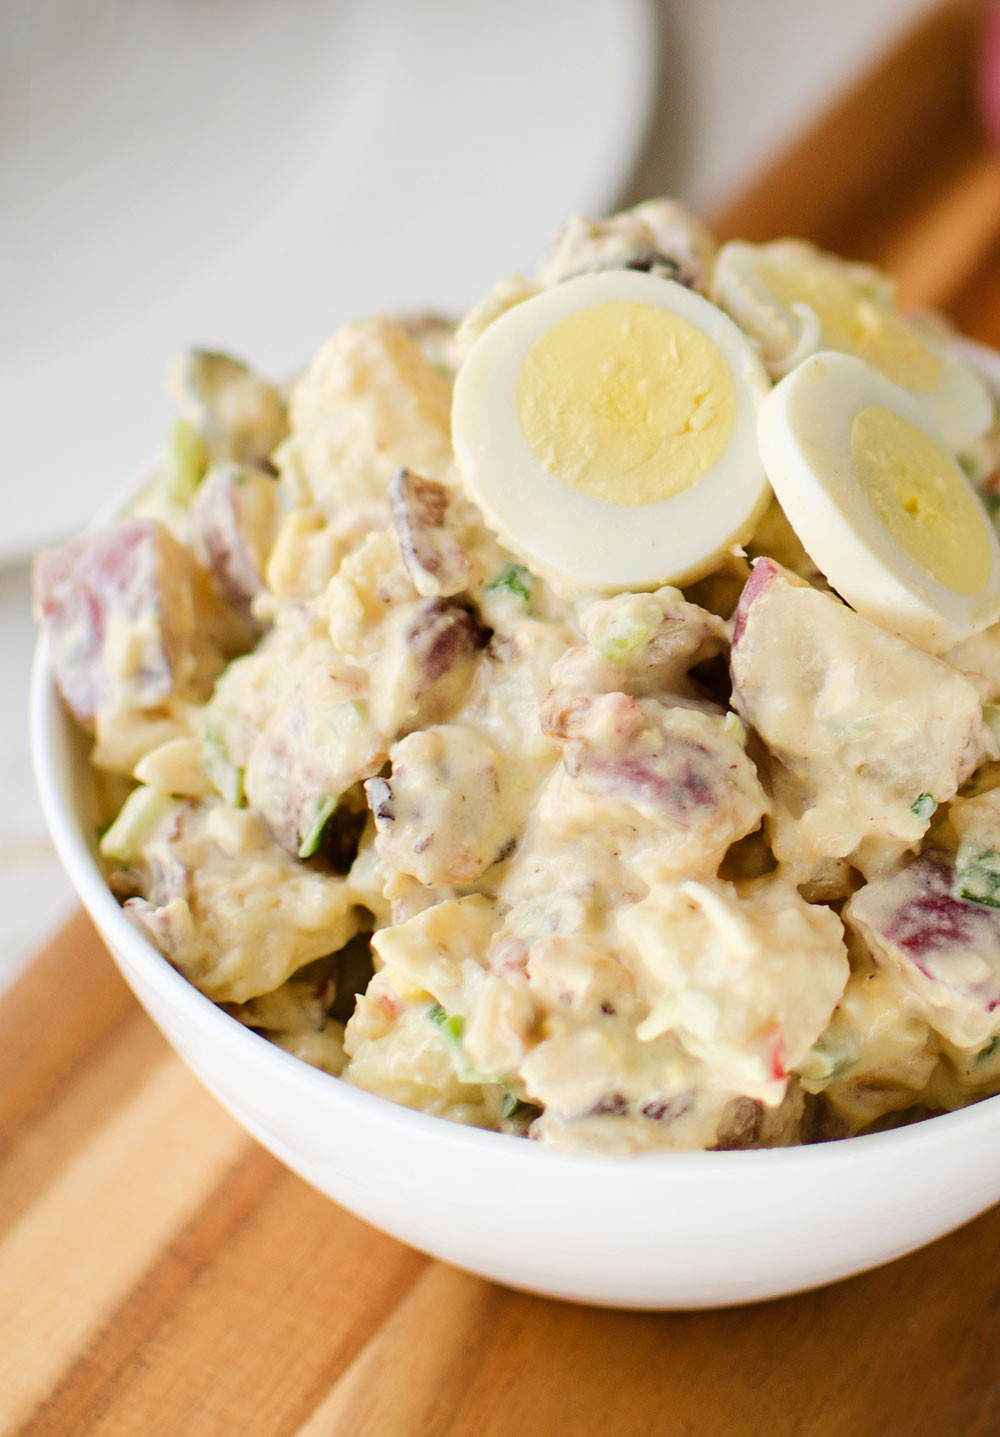 Redskin Potato Salad
 Roasted Garlic & Red Skin Potato Salad